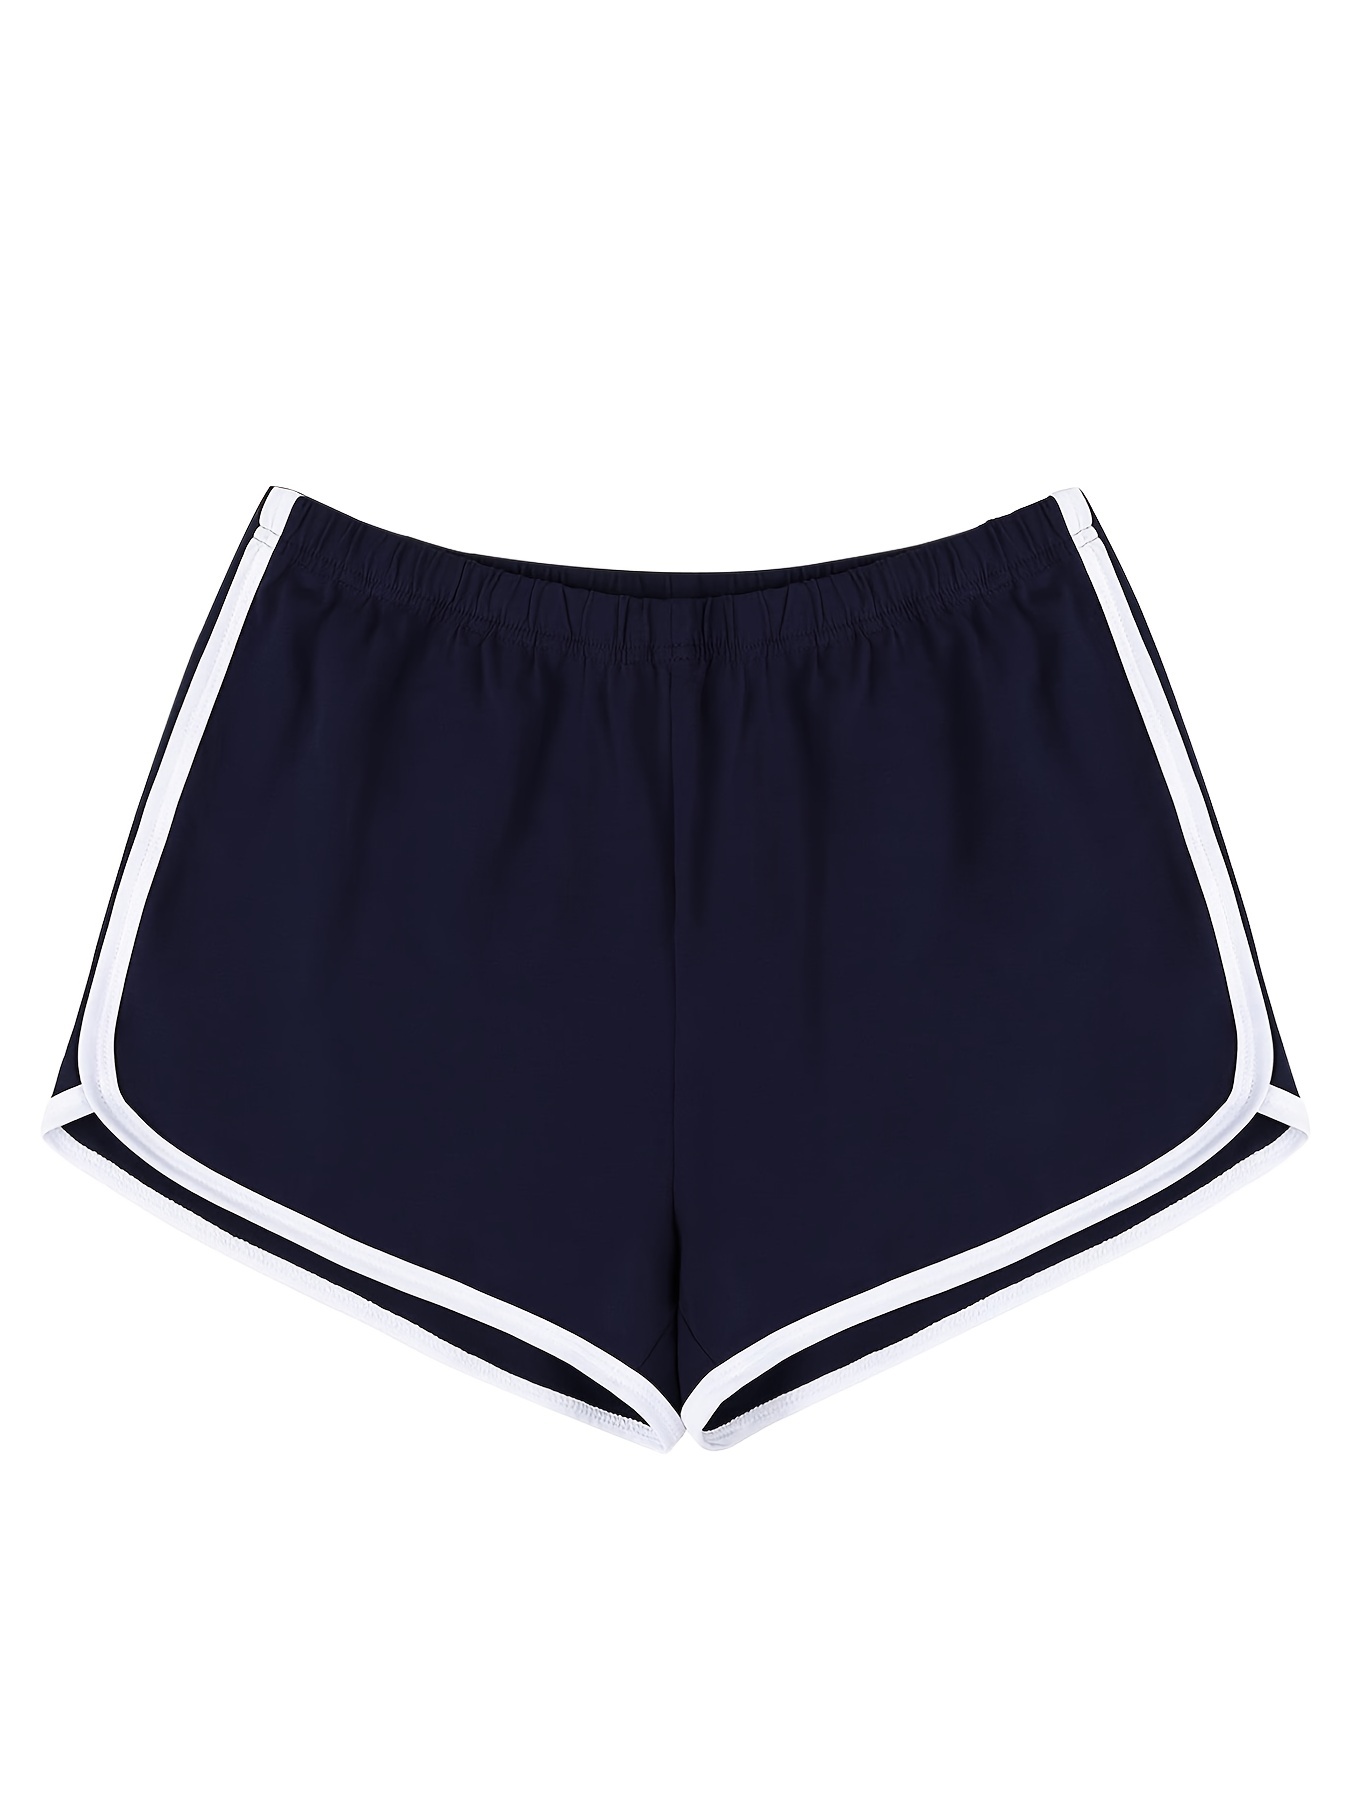 Oyoo-Hot-Yoga-Shorts-Summer-Women-Navy-Retro-Gym-Sports-Shorts